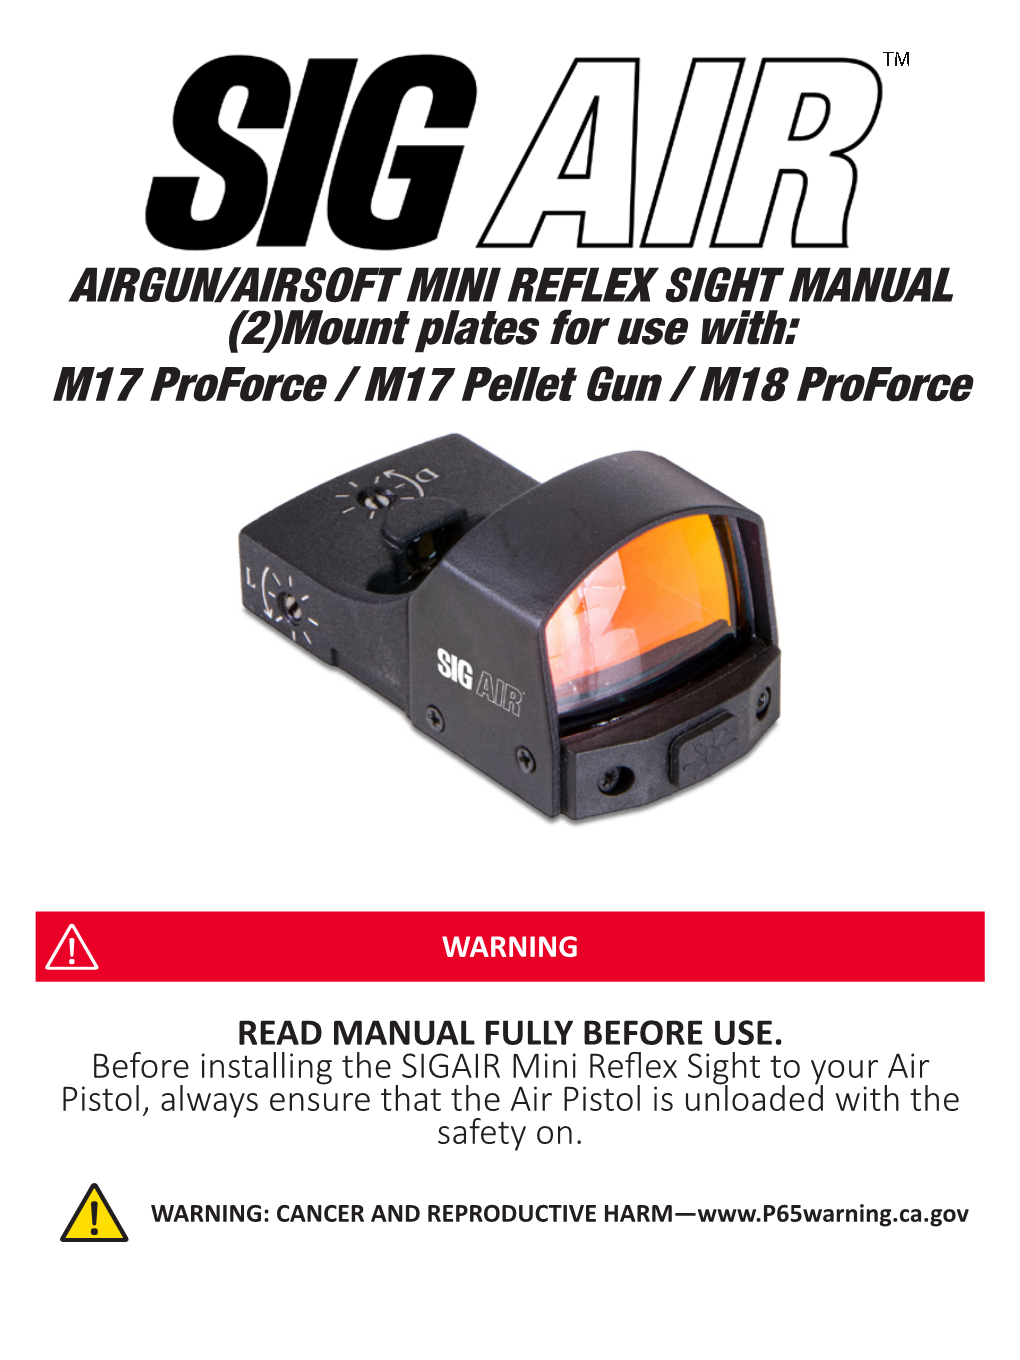 AIRGUN/AIRSOFT MINI REFLEX SIGHT MANUAL (2)Mount Plates for Use With: M17 Proforce / M17 Pellet Gun / M18 Proforce